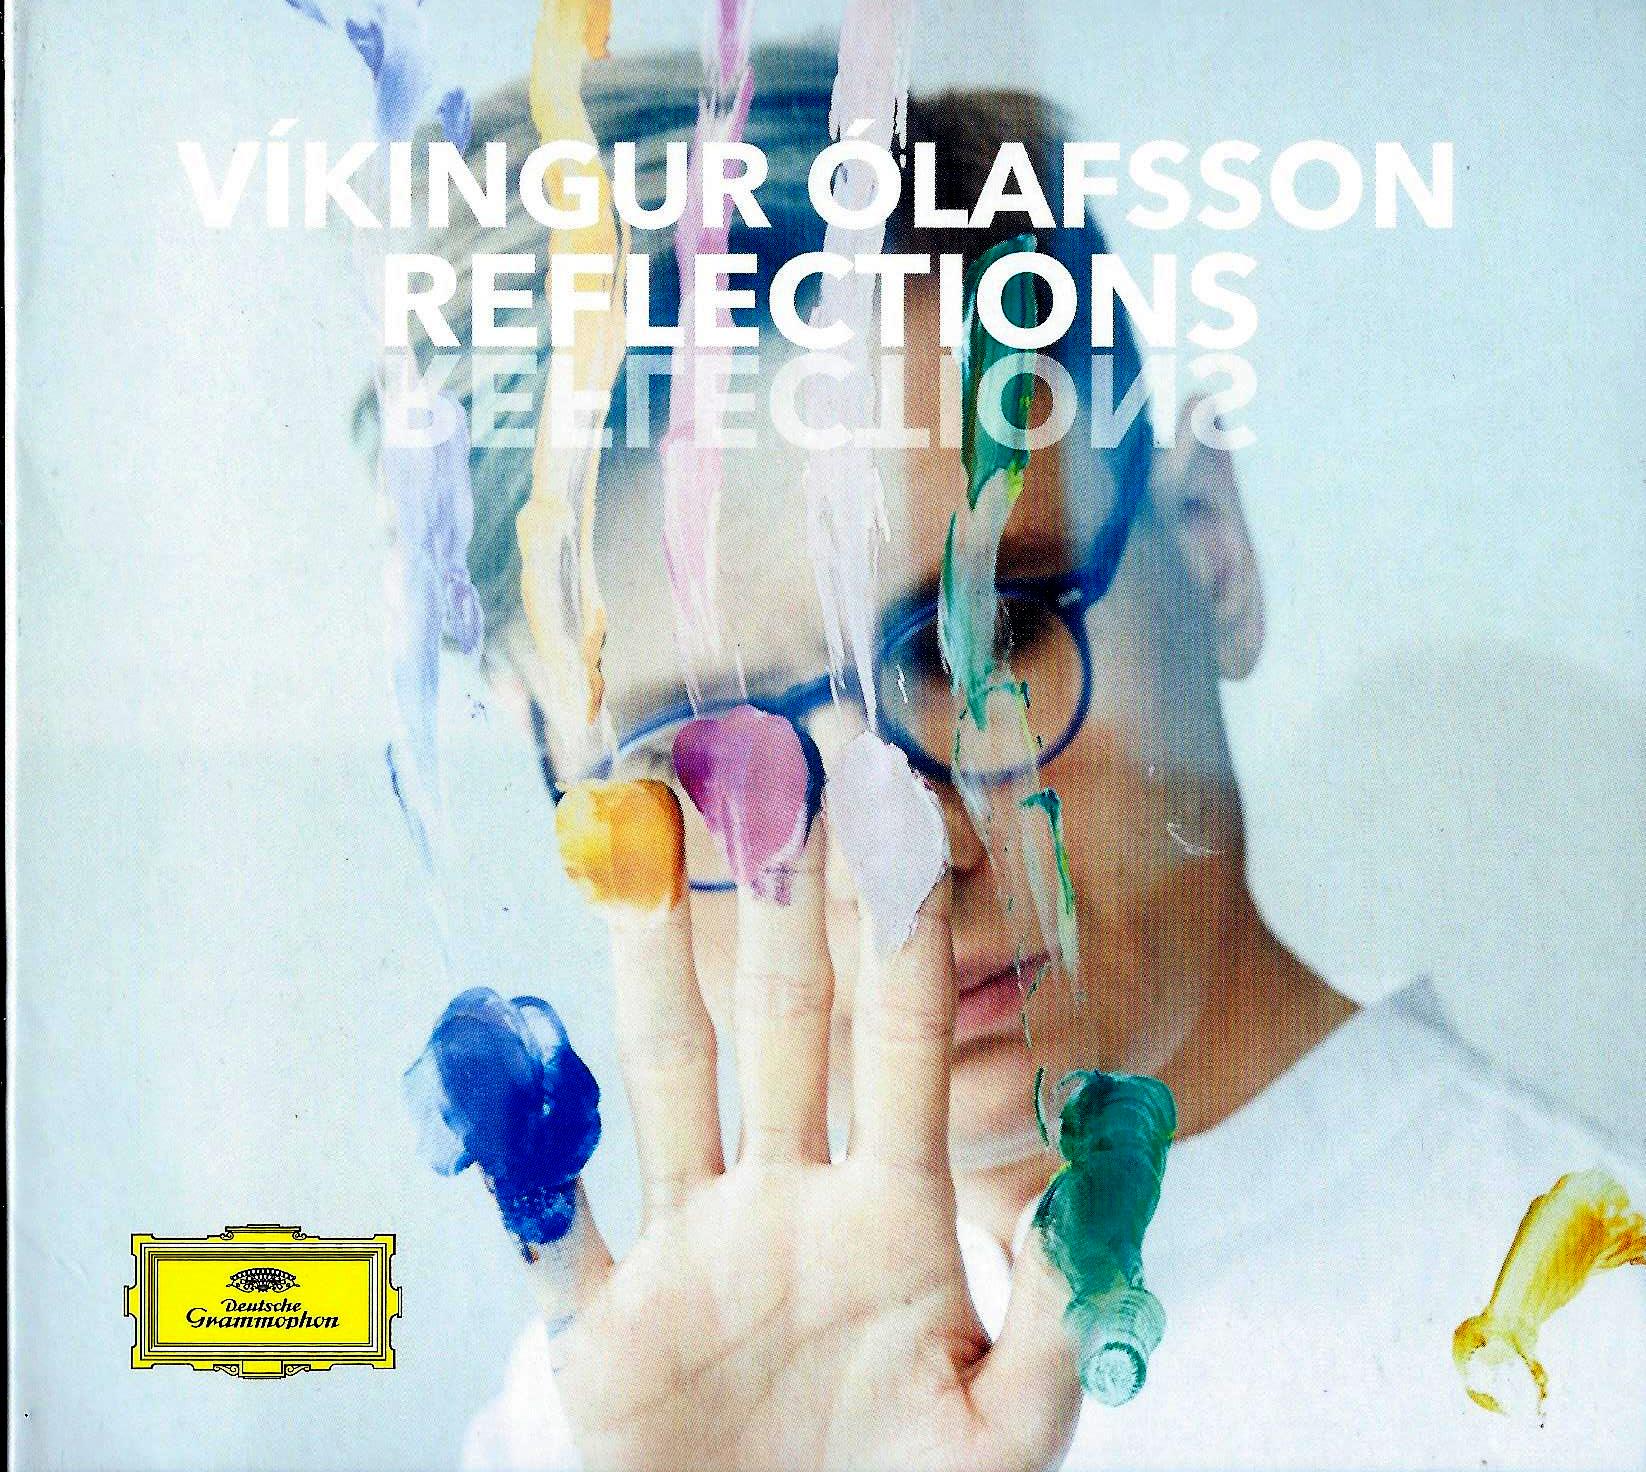 VIKINGUR OLAFSSON - REFLECTIONS